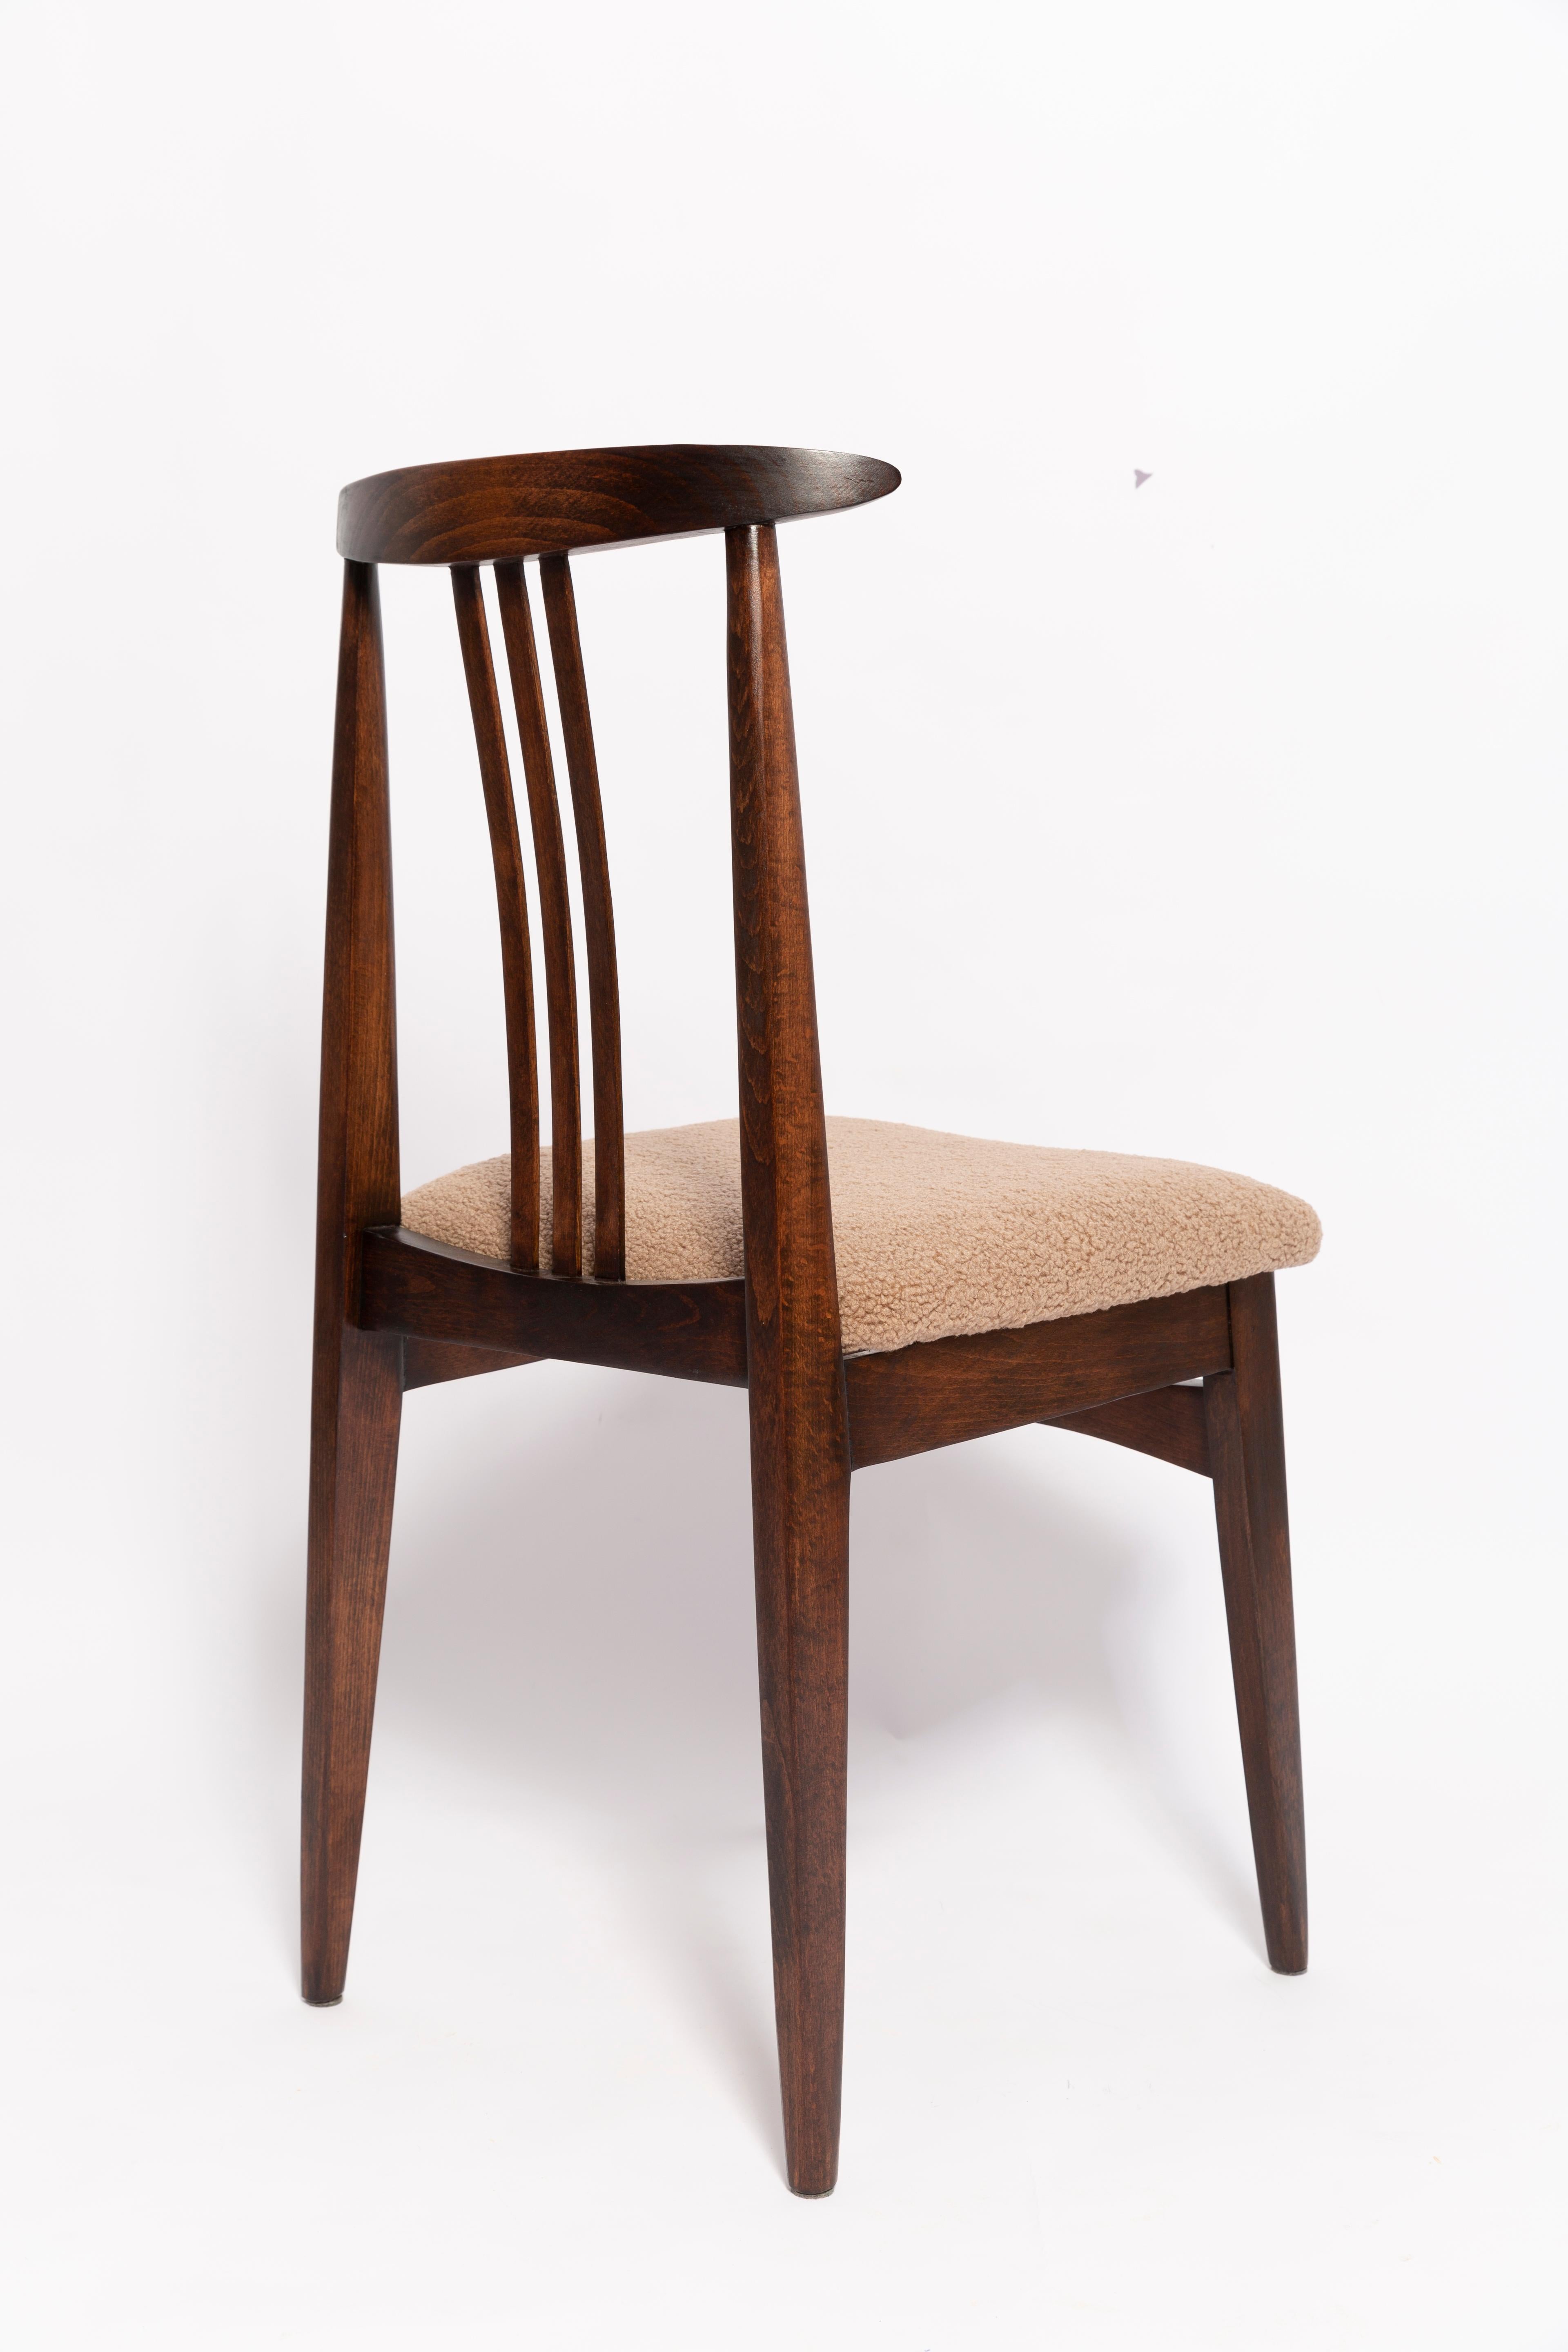 Polish Mid Century Latte Boucle Chair, Walnut Wood, M. Zielinski, Europe, 1960s For Sale